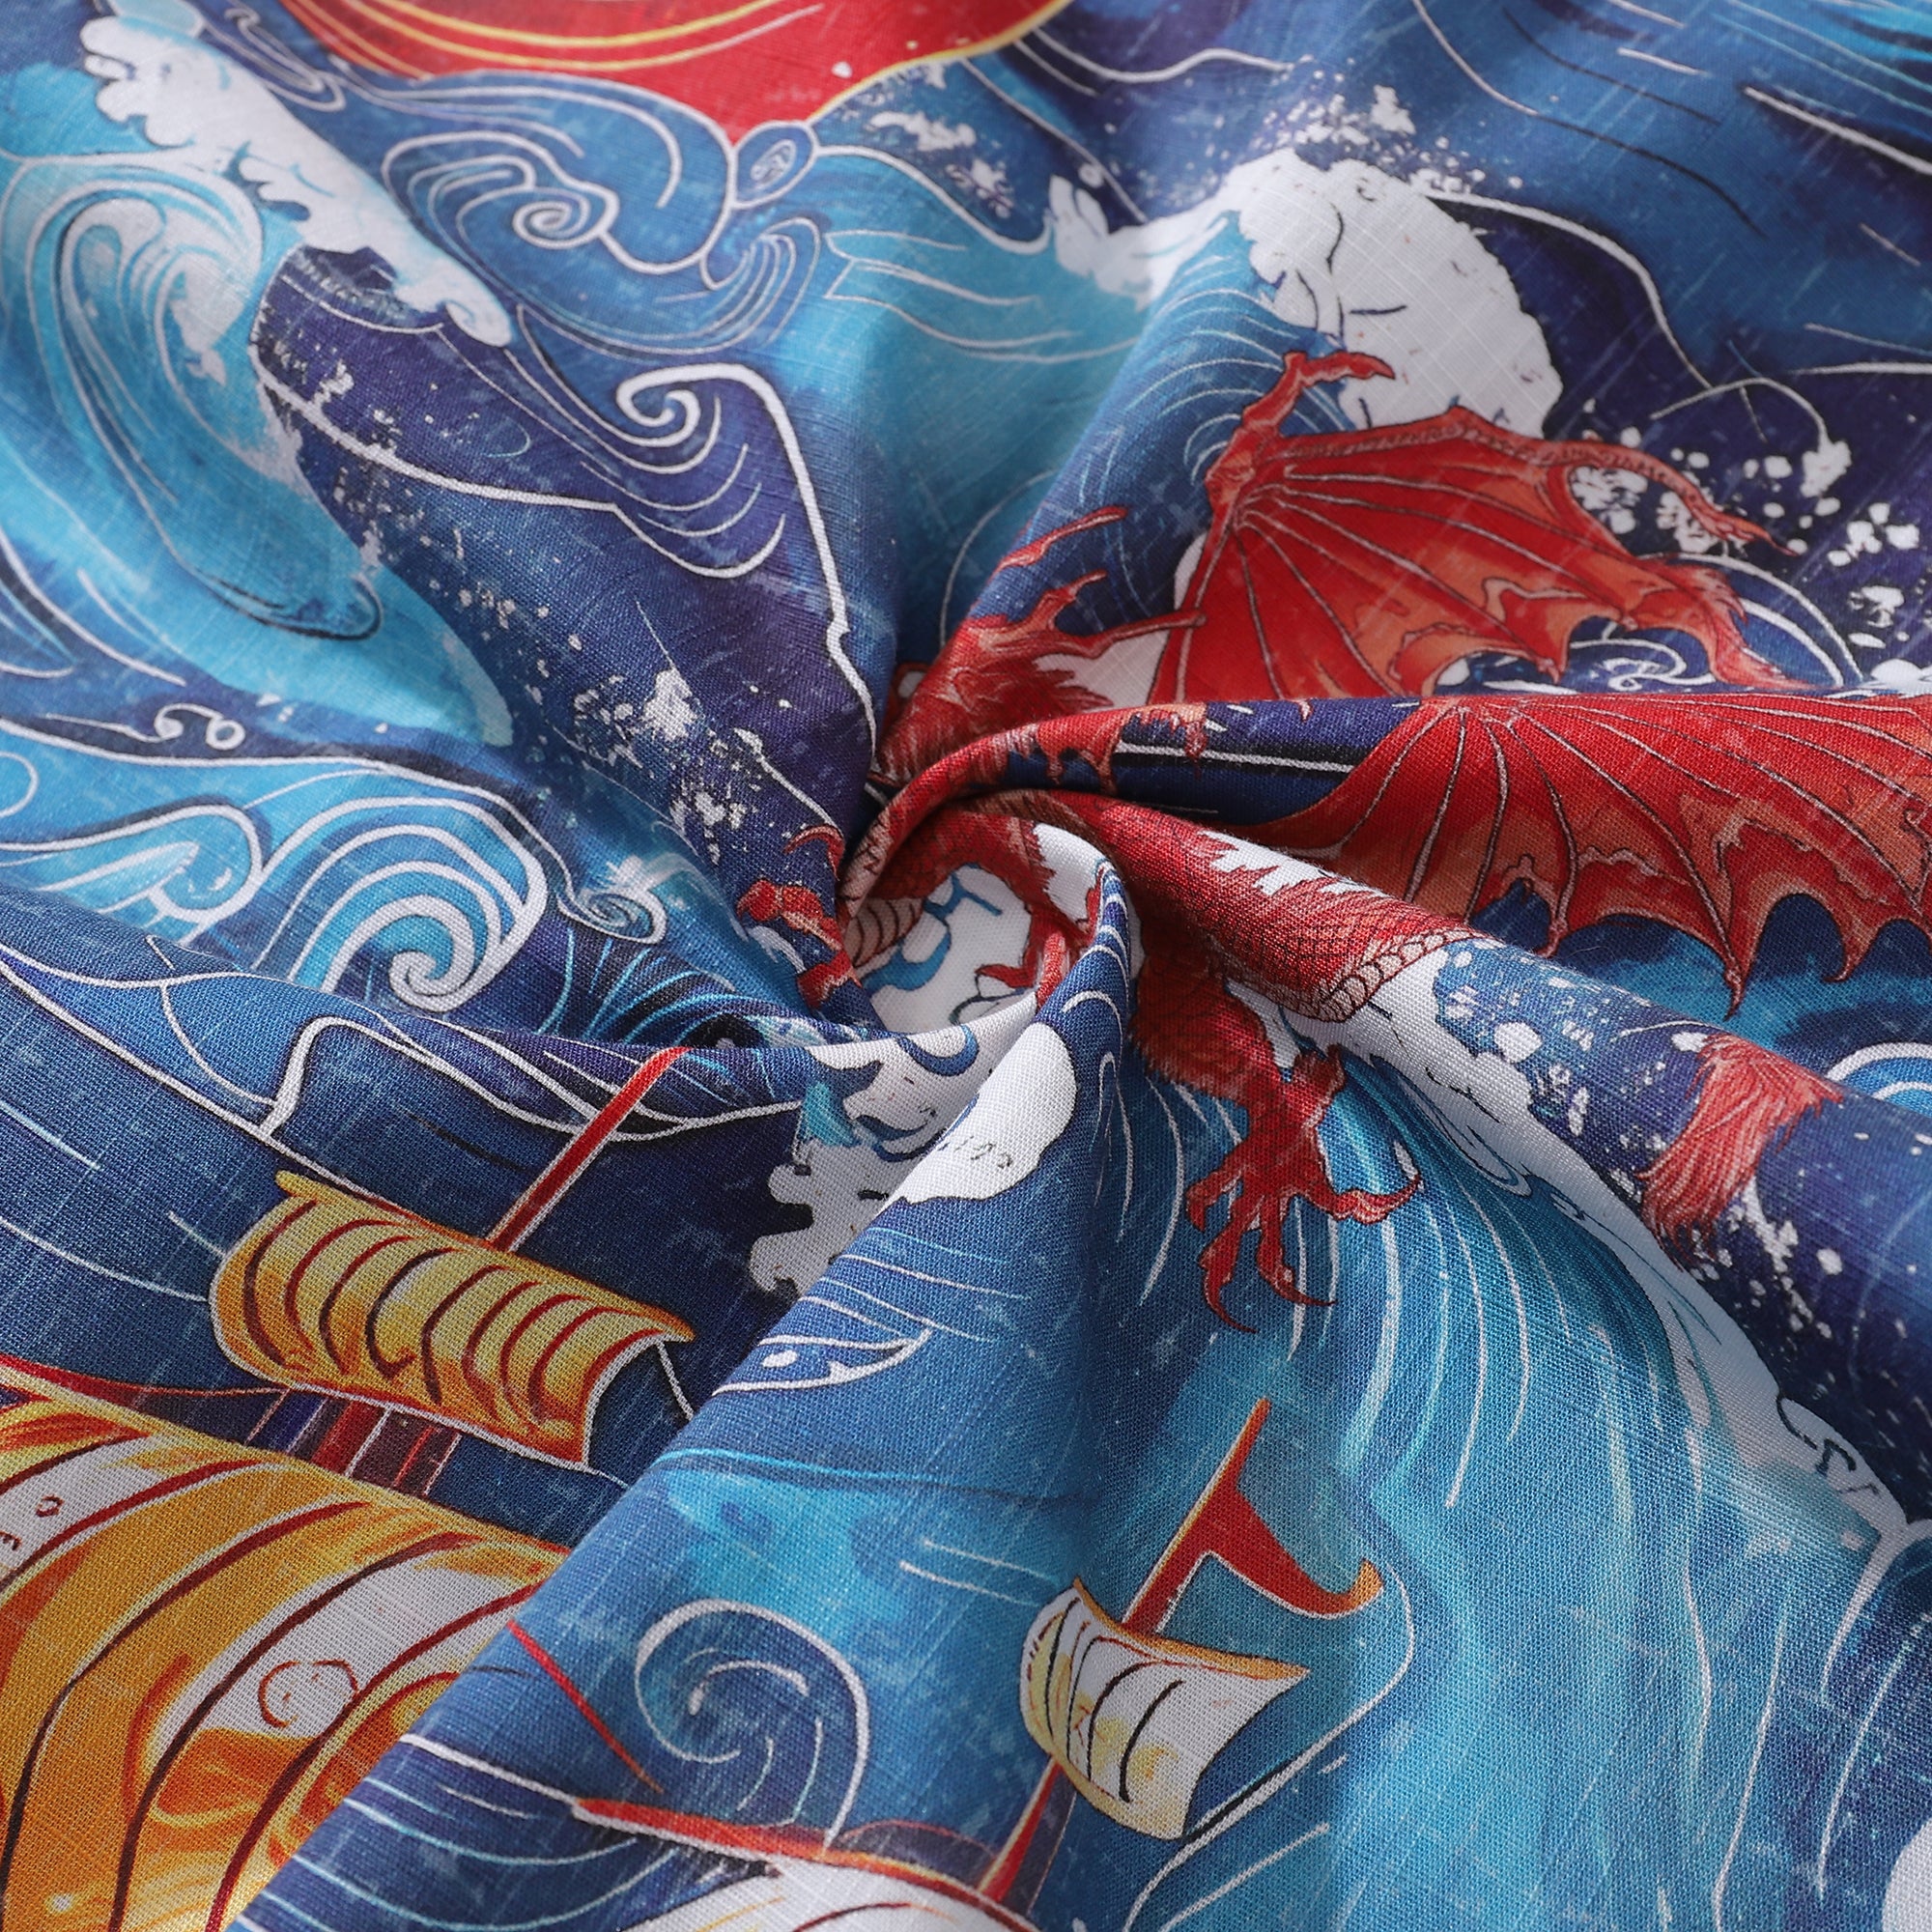 Herren-Hawaii-Hemd, Drachenjagd, Wikinger, Baumwolle, kurzärmelig, Aloha-Hemd mit Knopfleiste